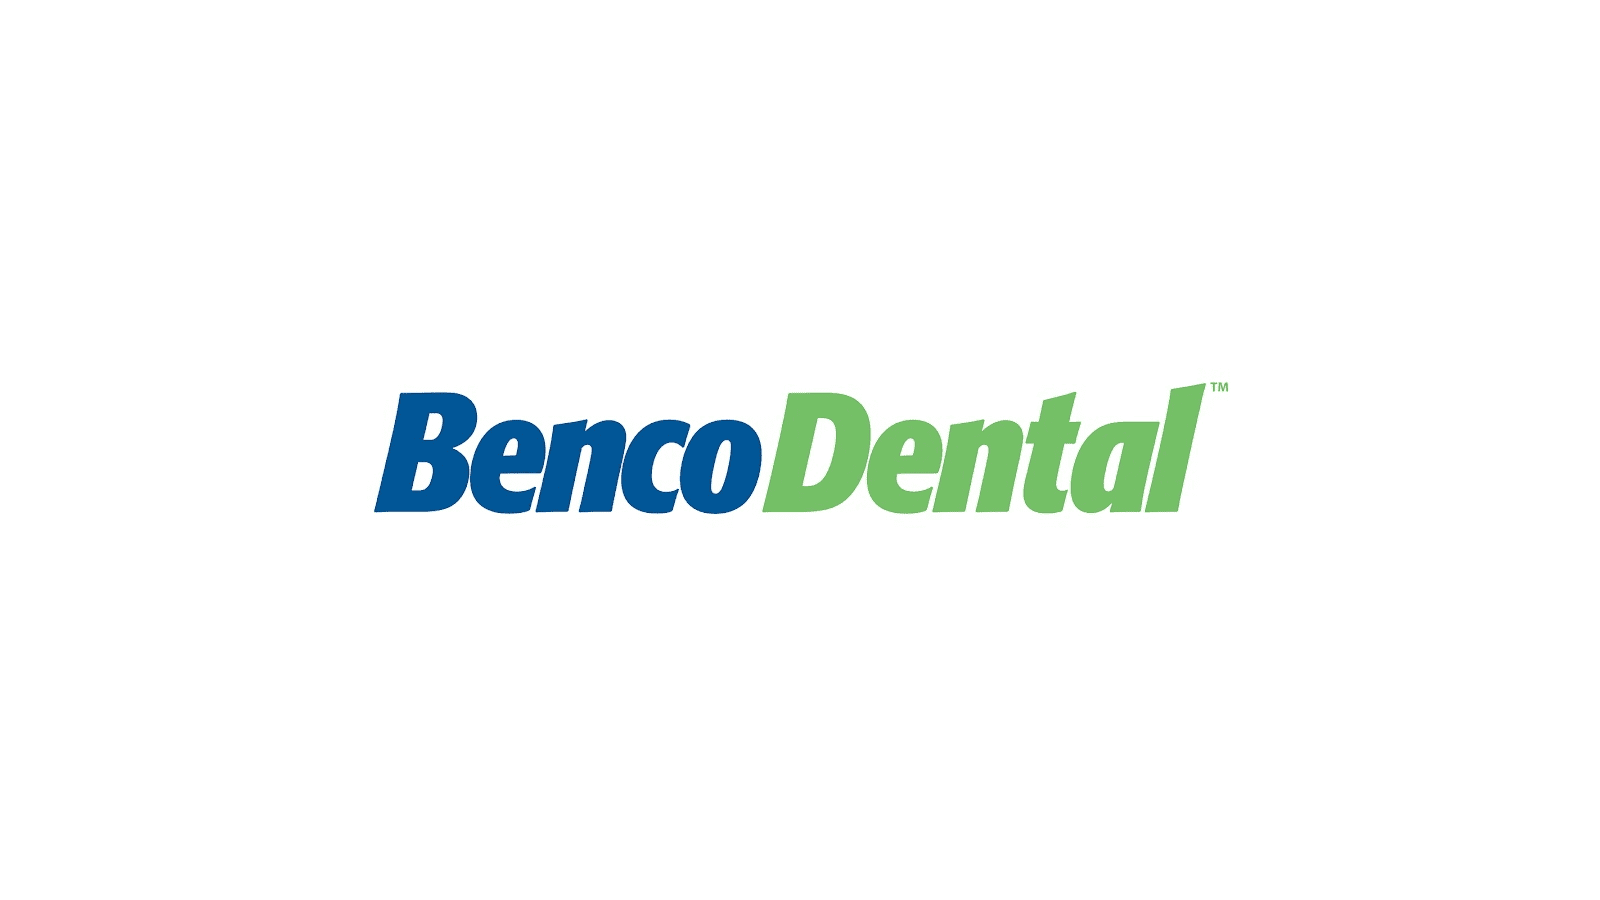 Benco dental logo